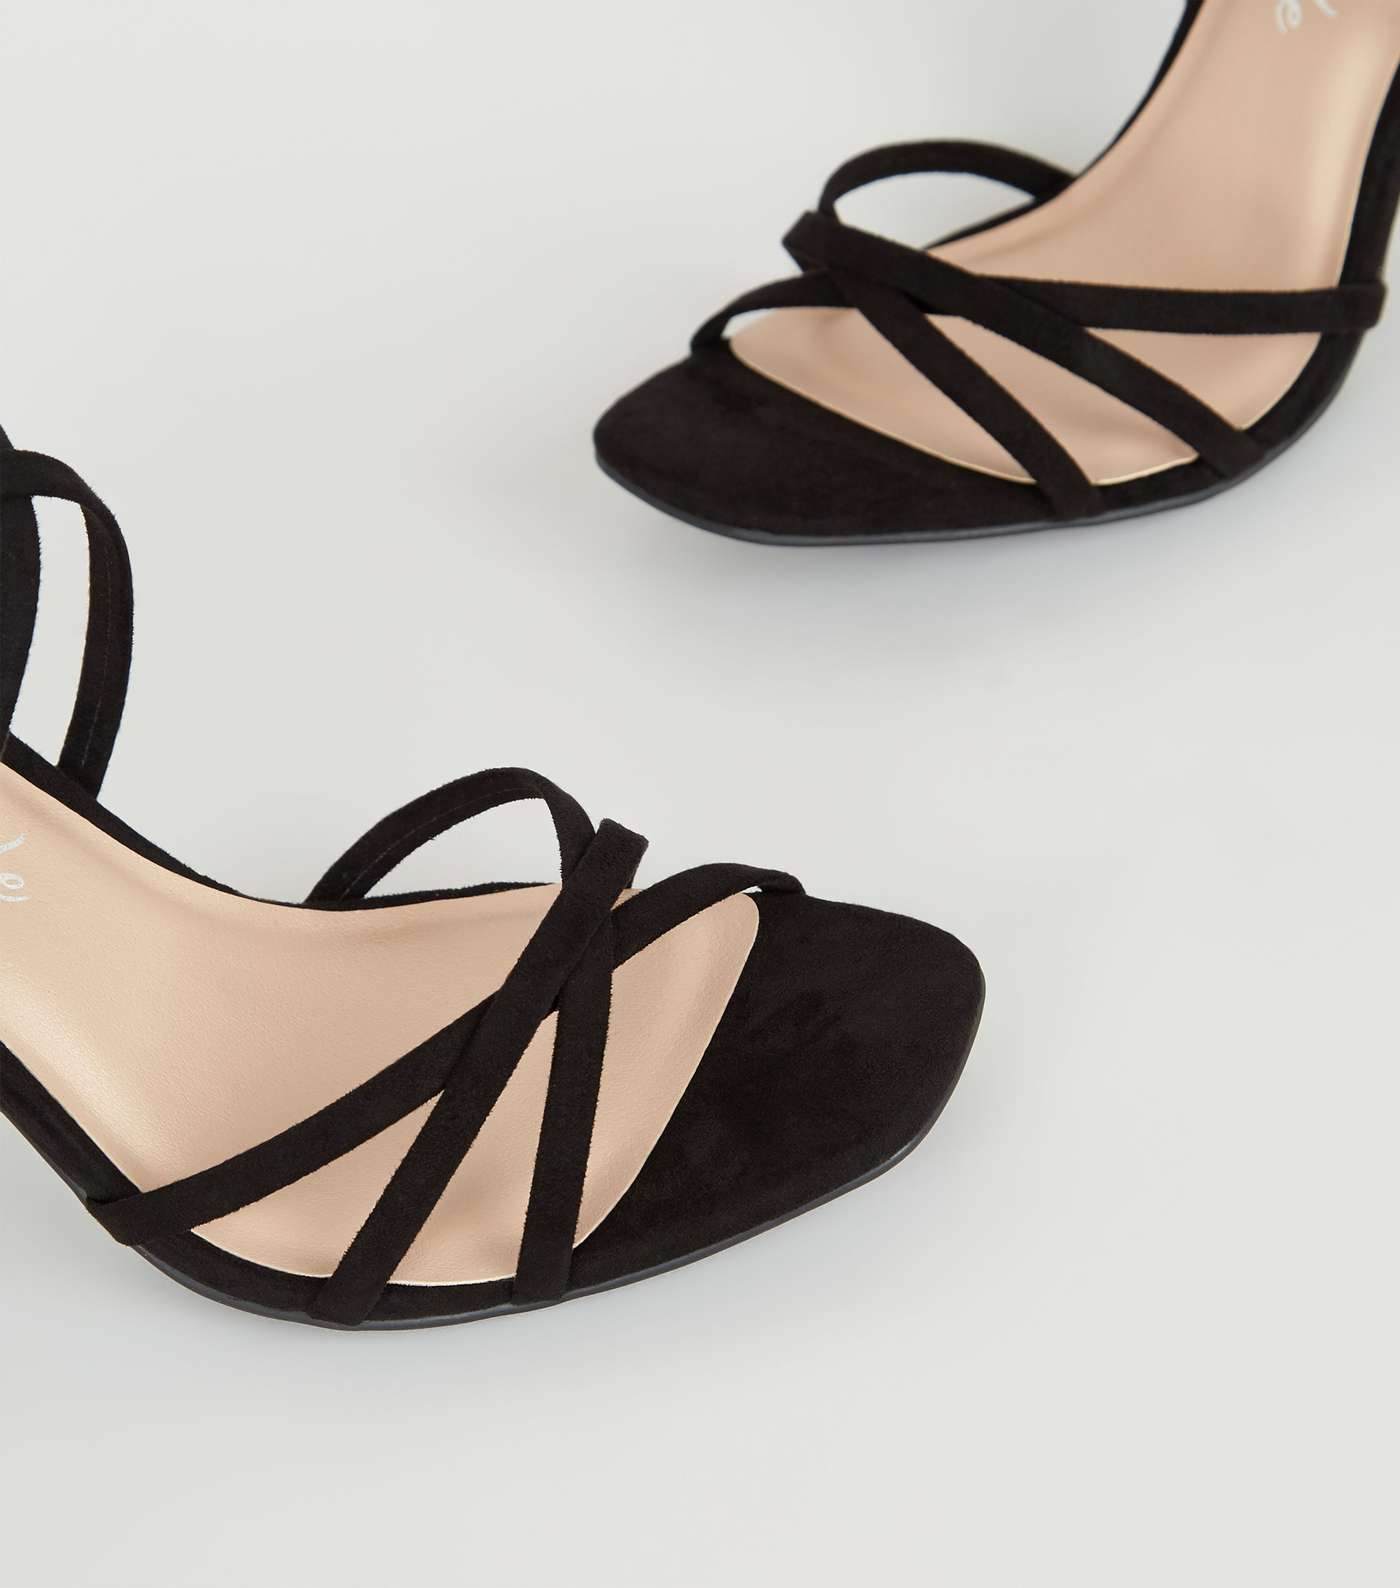 Black Strappy Square Toe Heels Image 4